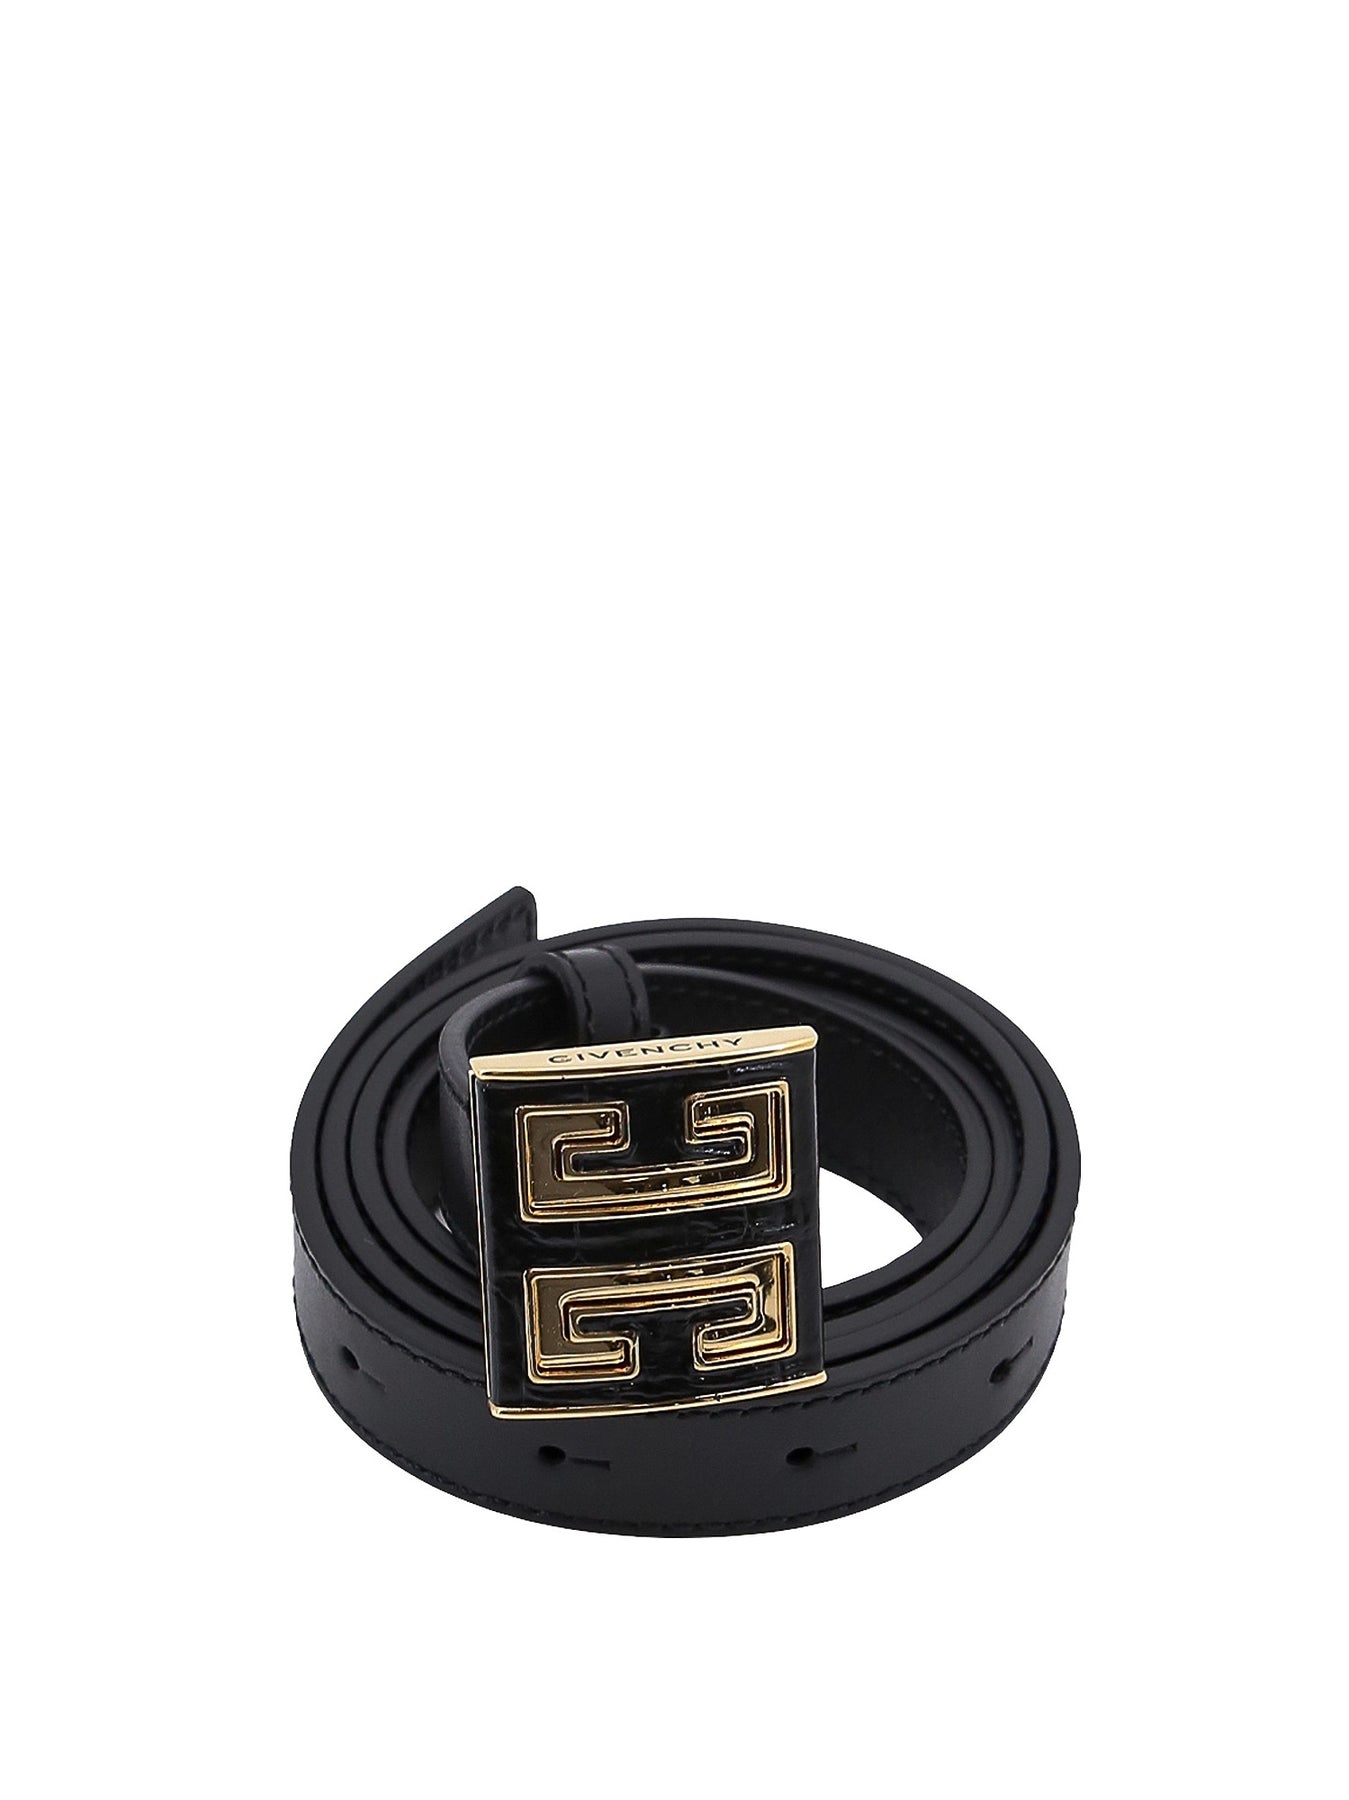 4G leather belt - 3